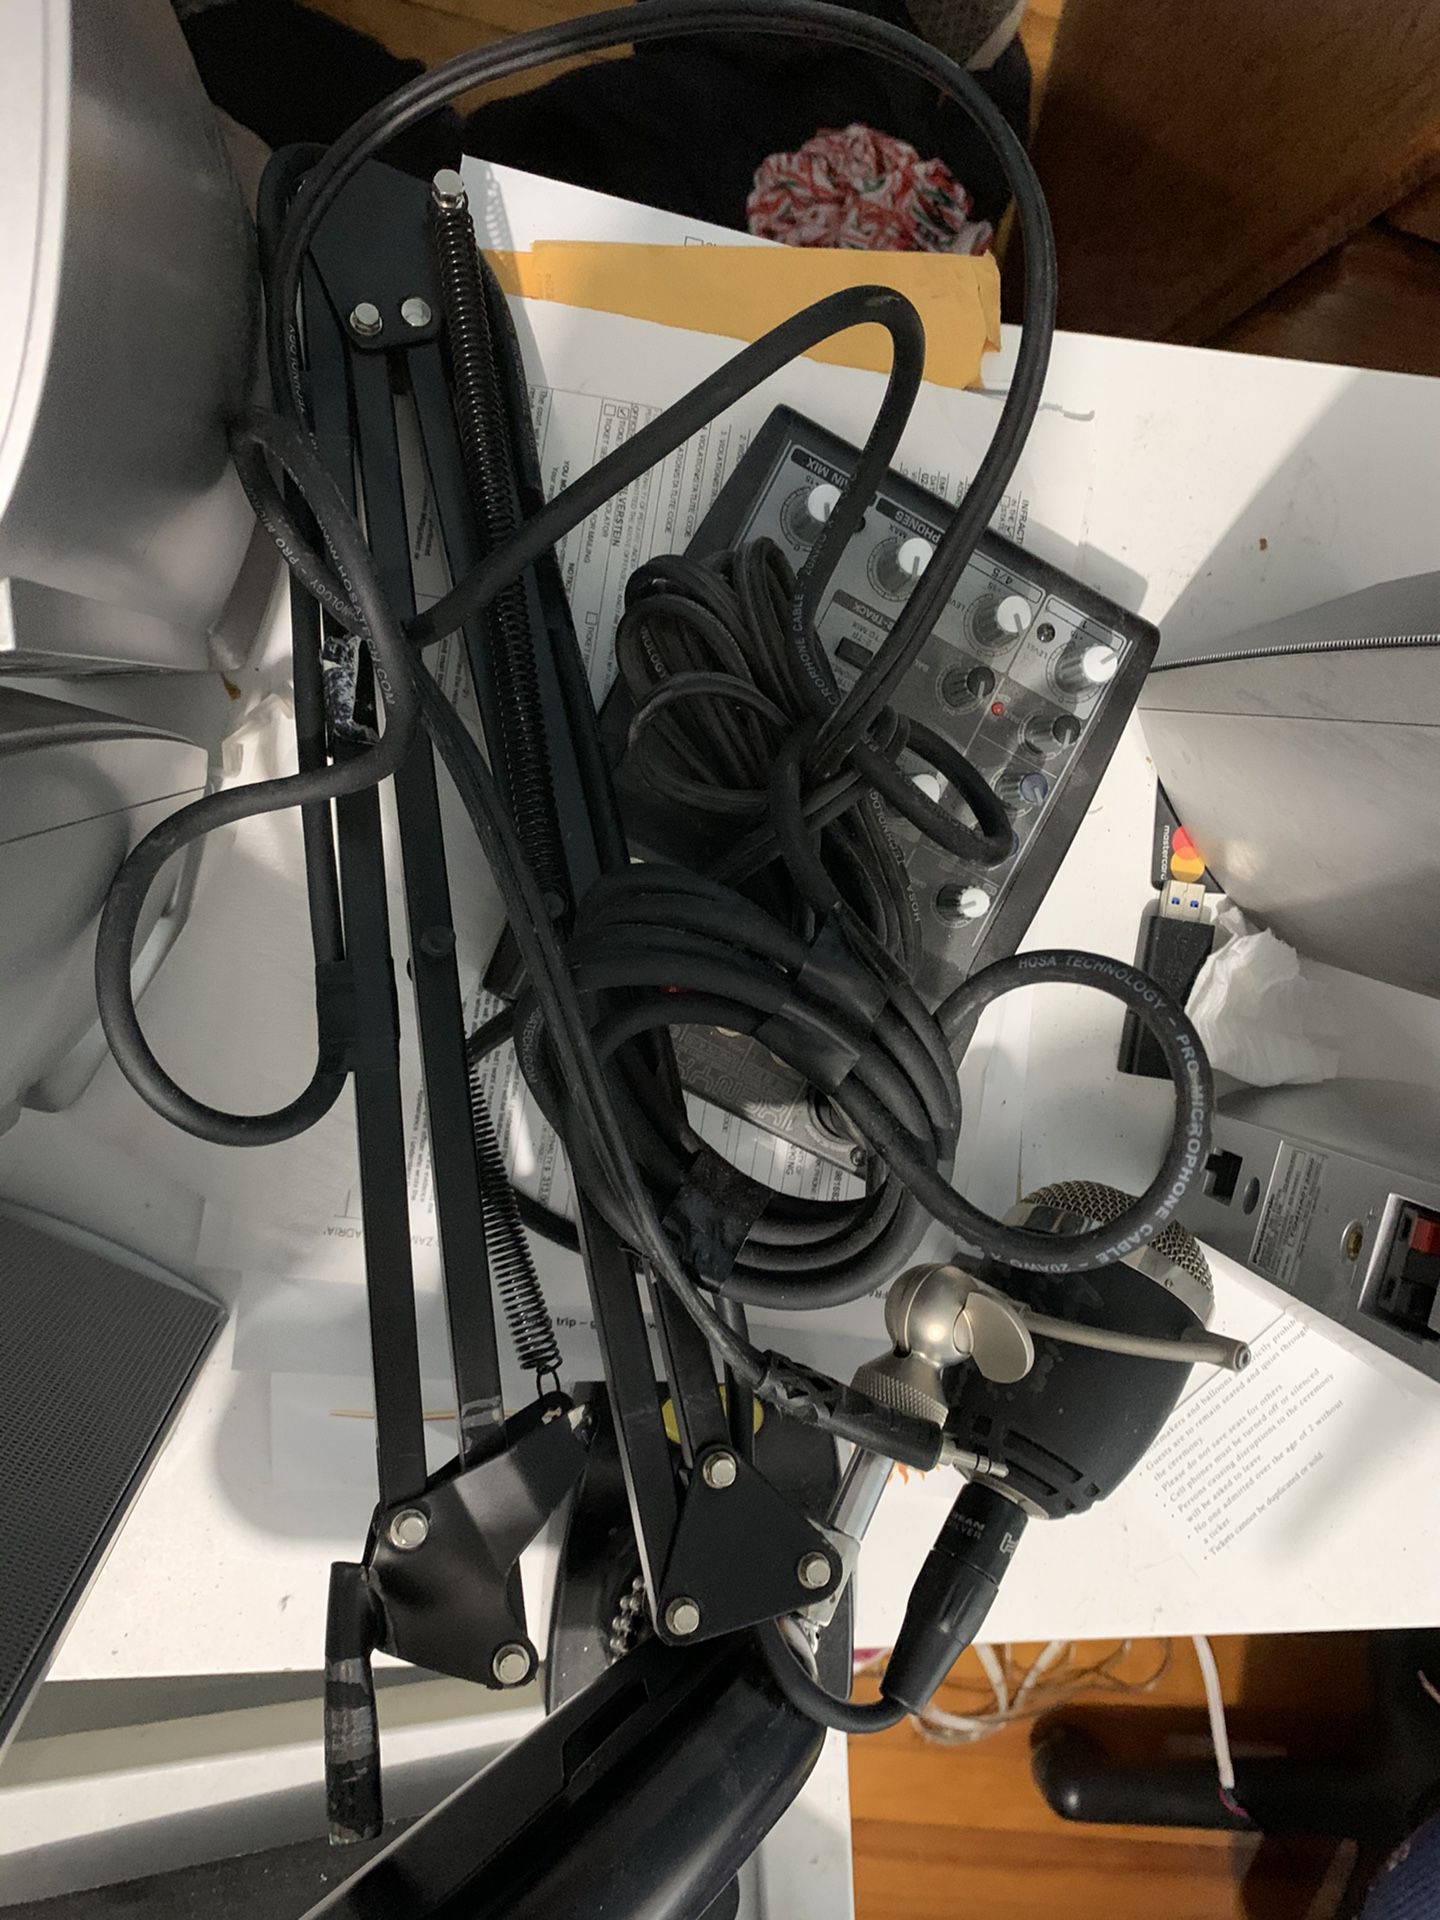 Studio mic with cable & audio mixer